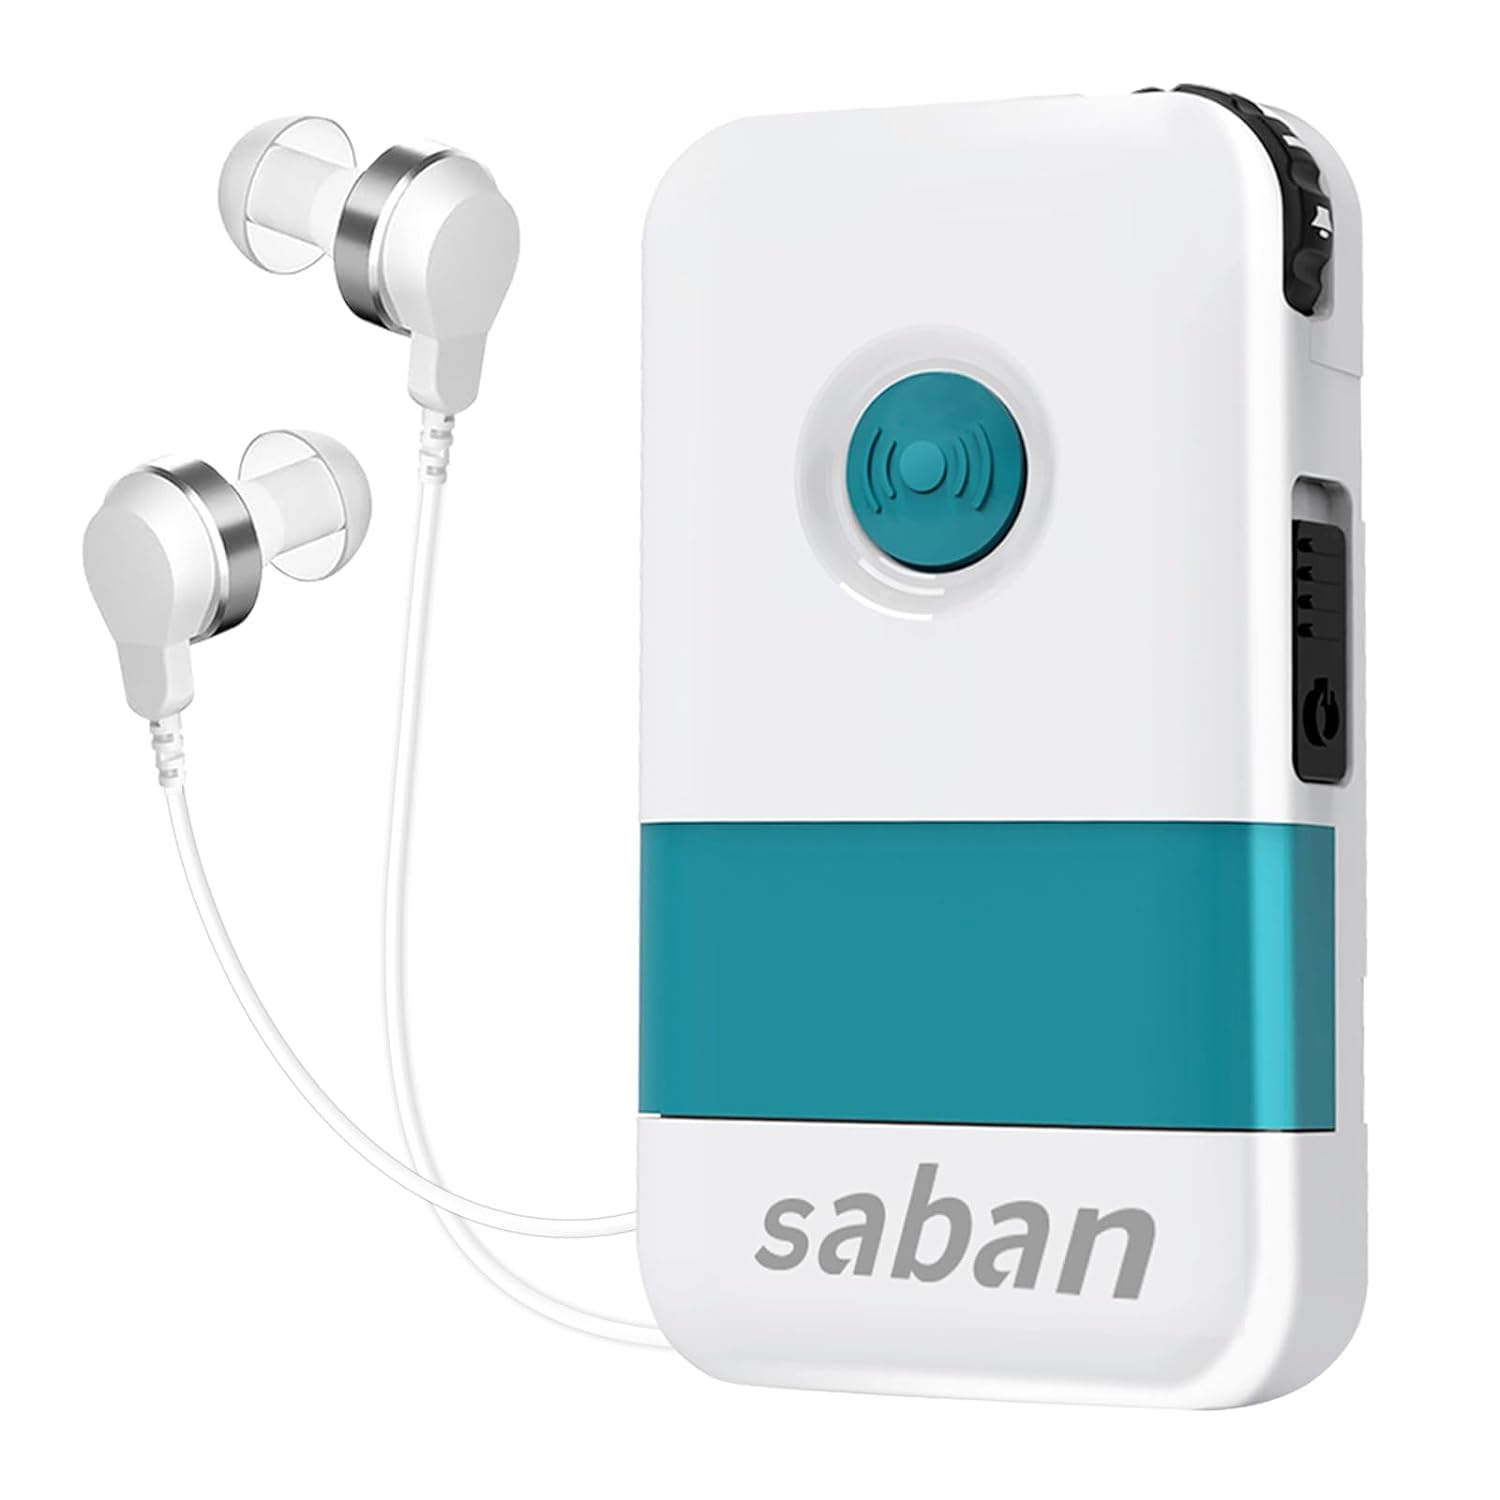 Saban Hearing Amplifier Review